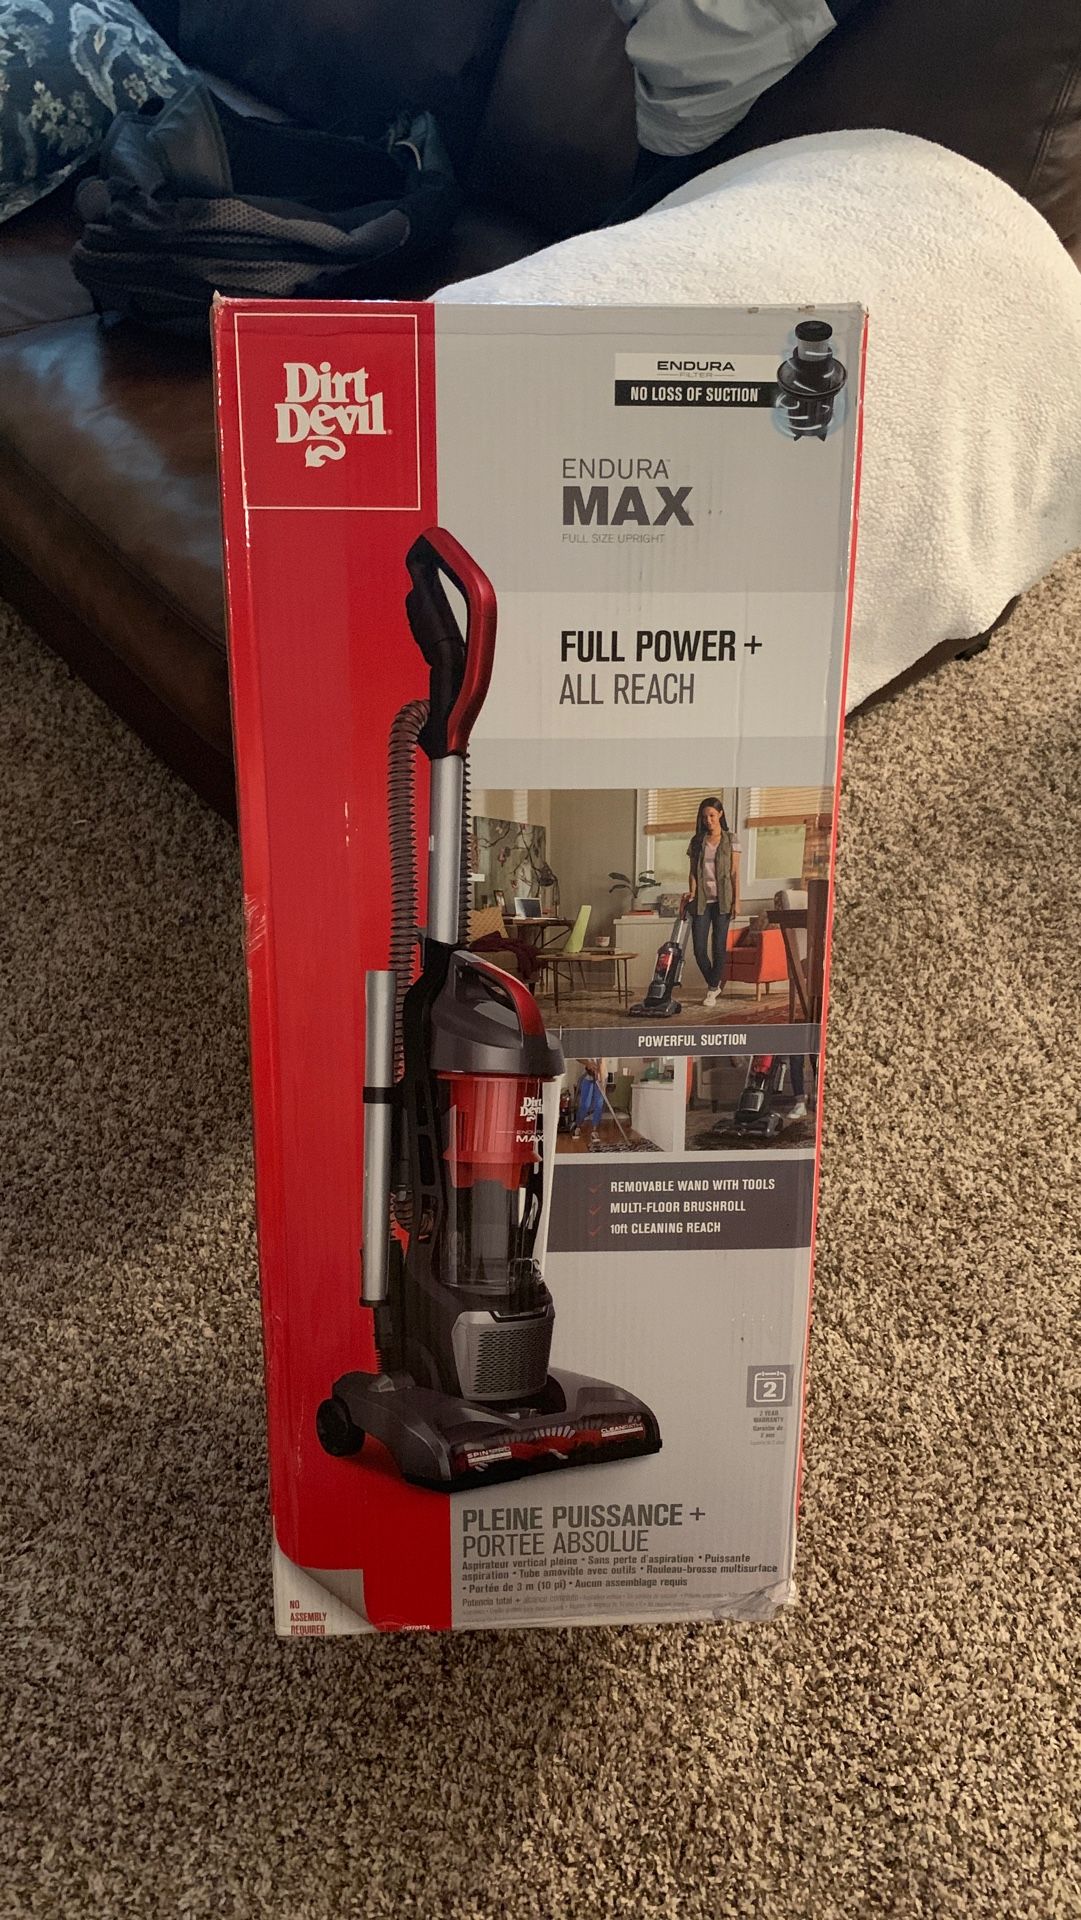 NEVER USED! Brand new vacuum